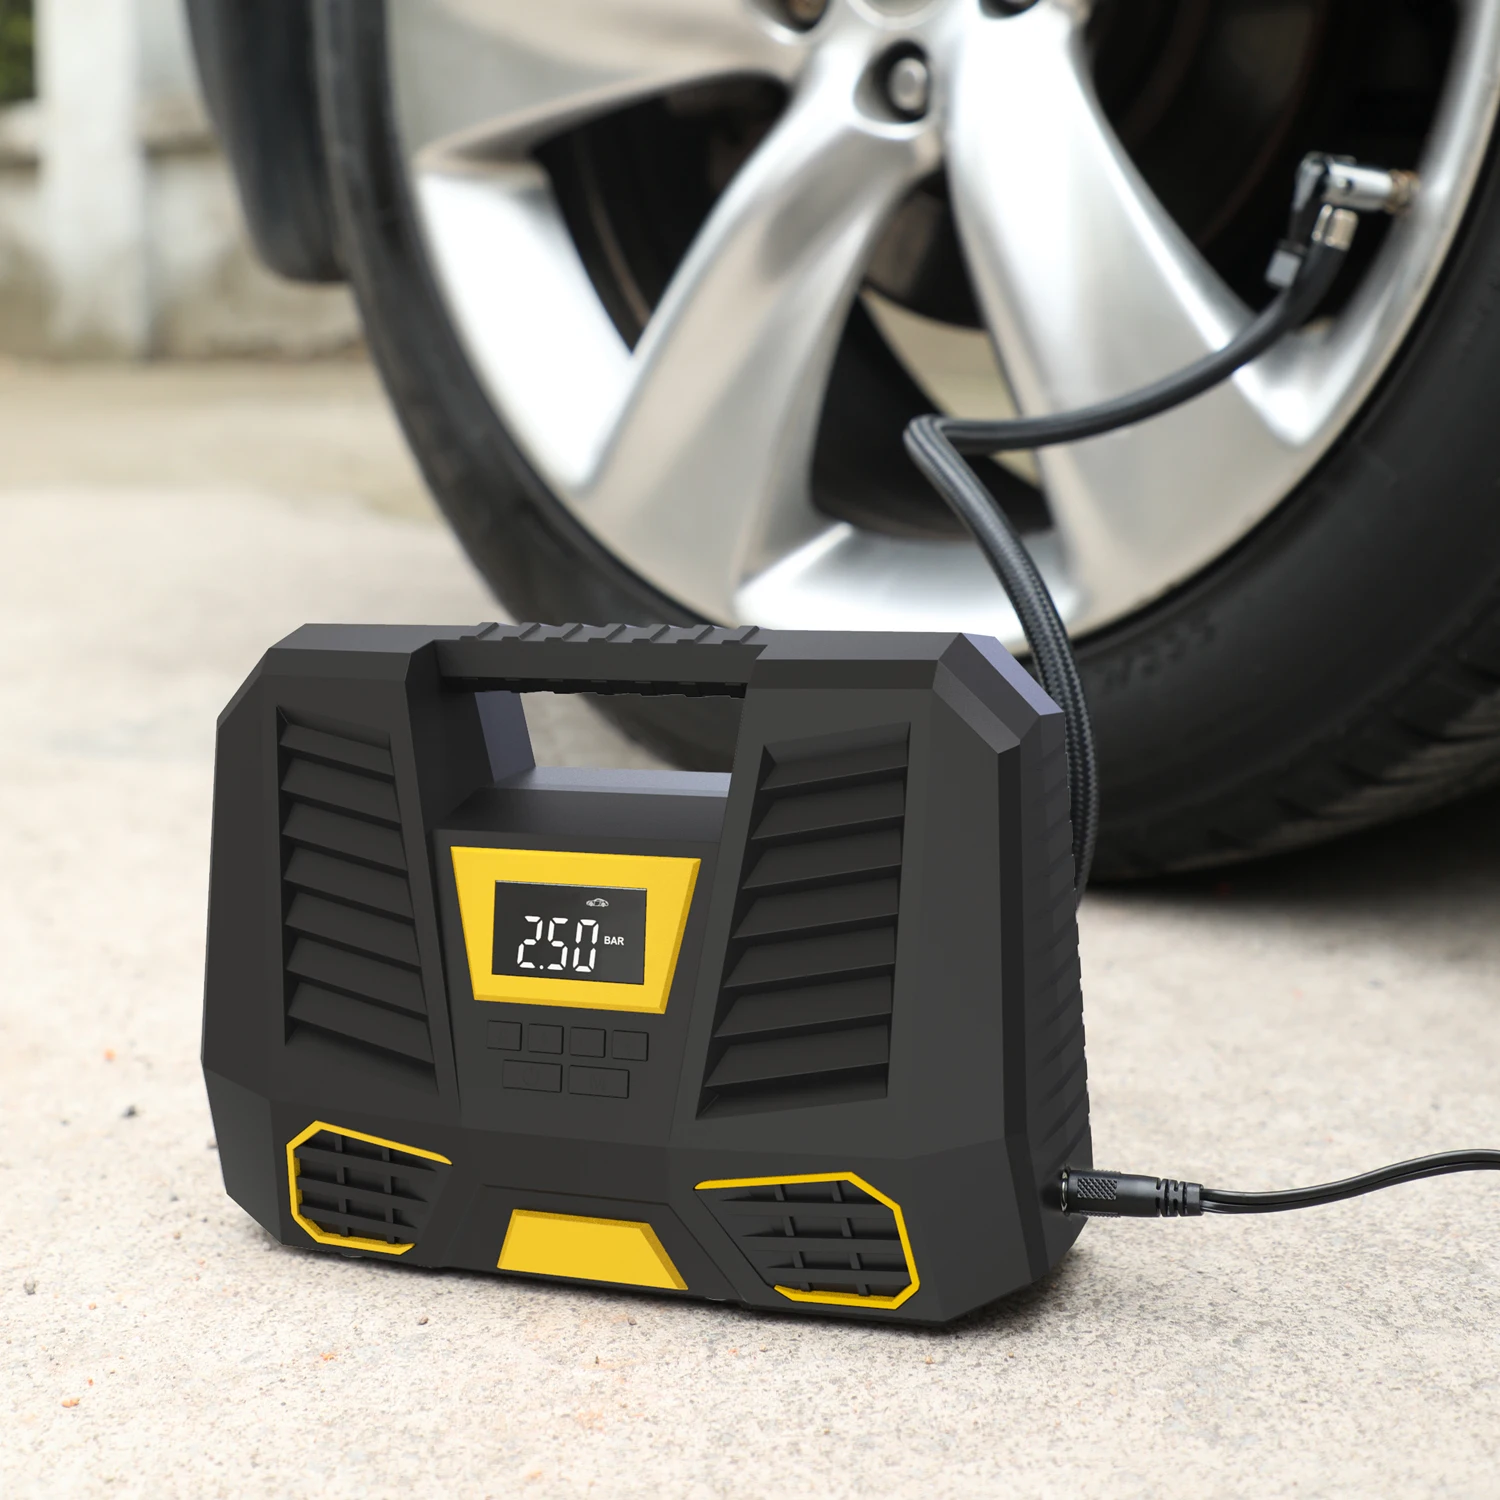 

Digital Car Tire Inflator Portable Air Compressor For Bike Tires 12v Air Pump Tire Pump With Pressure Gauge LED Light